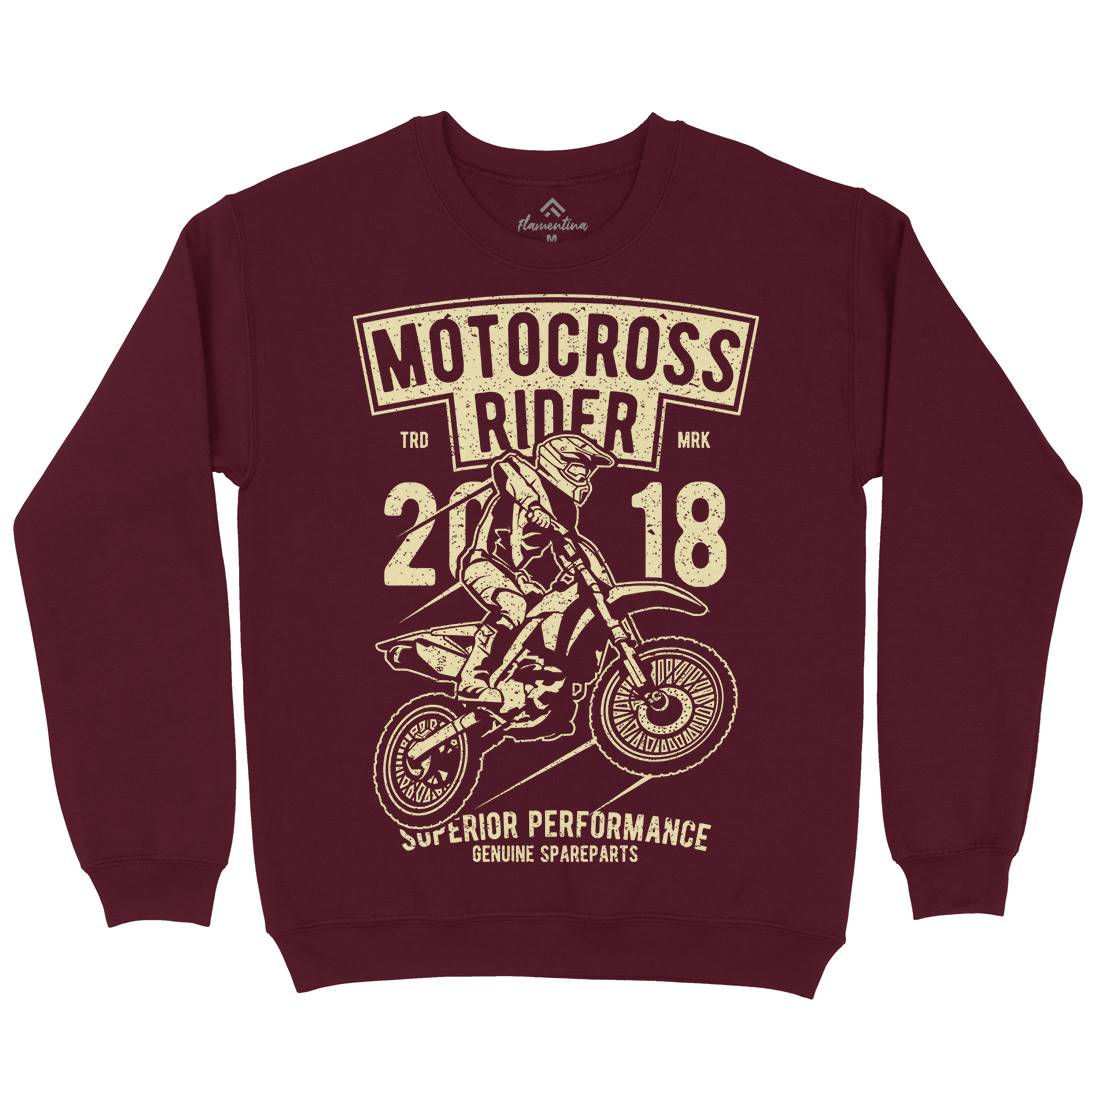 Motocross Rider Kids Crew Neck Sweatshirt Motorcycles A718